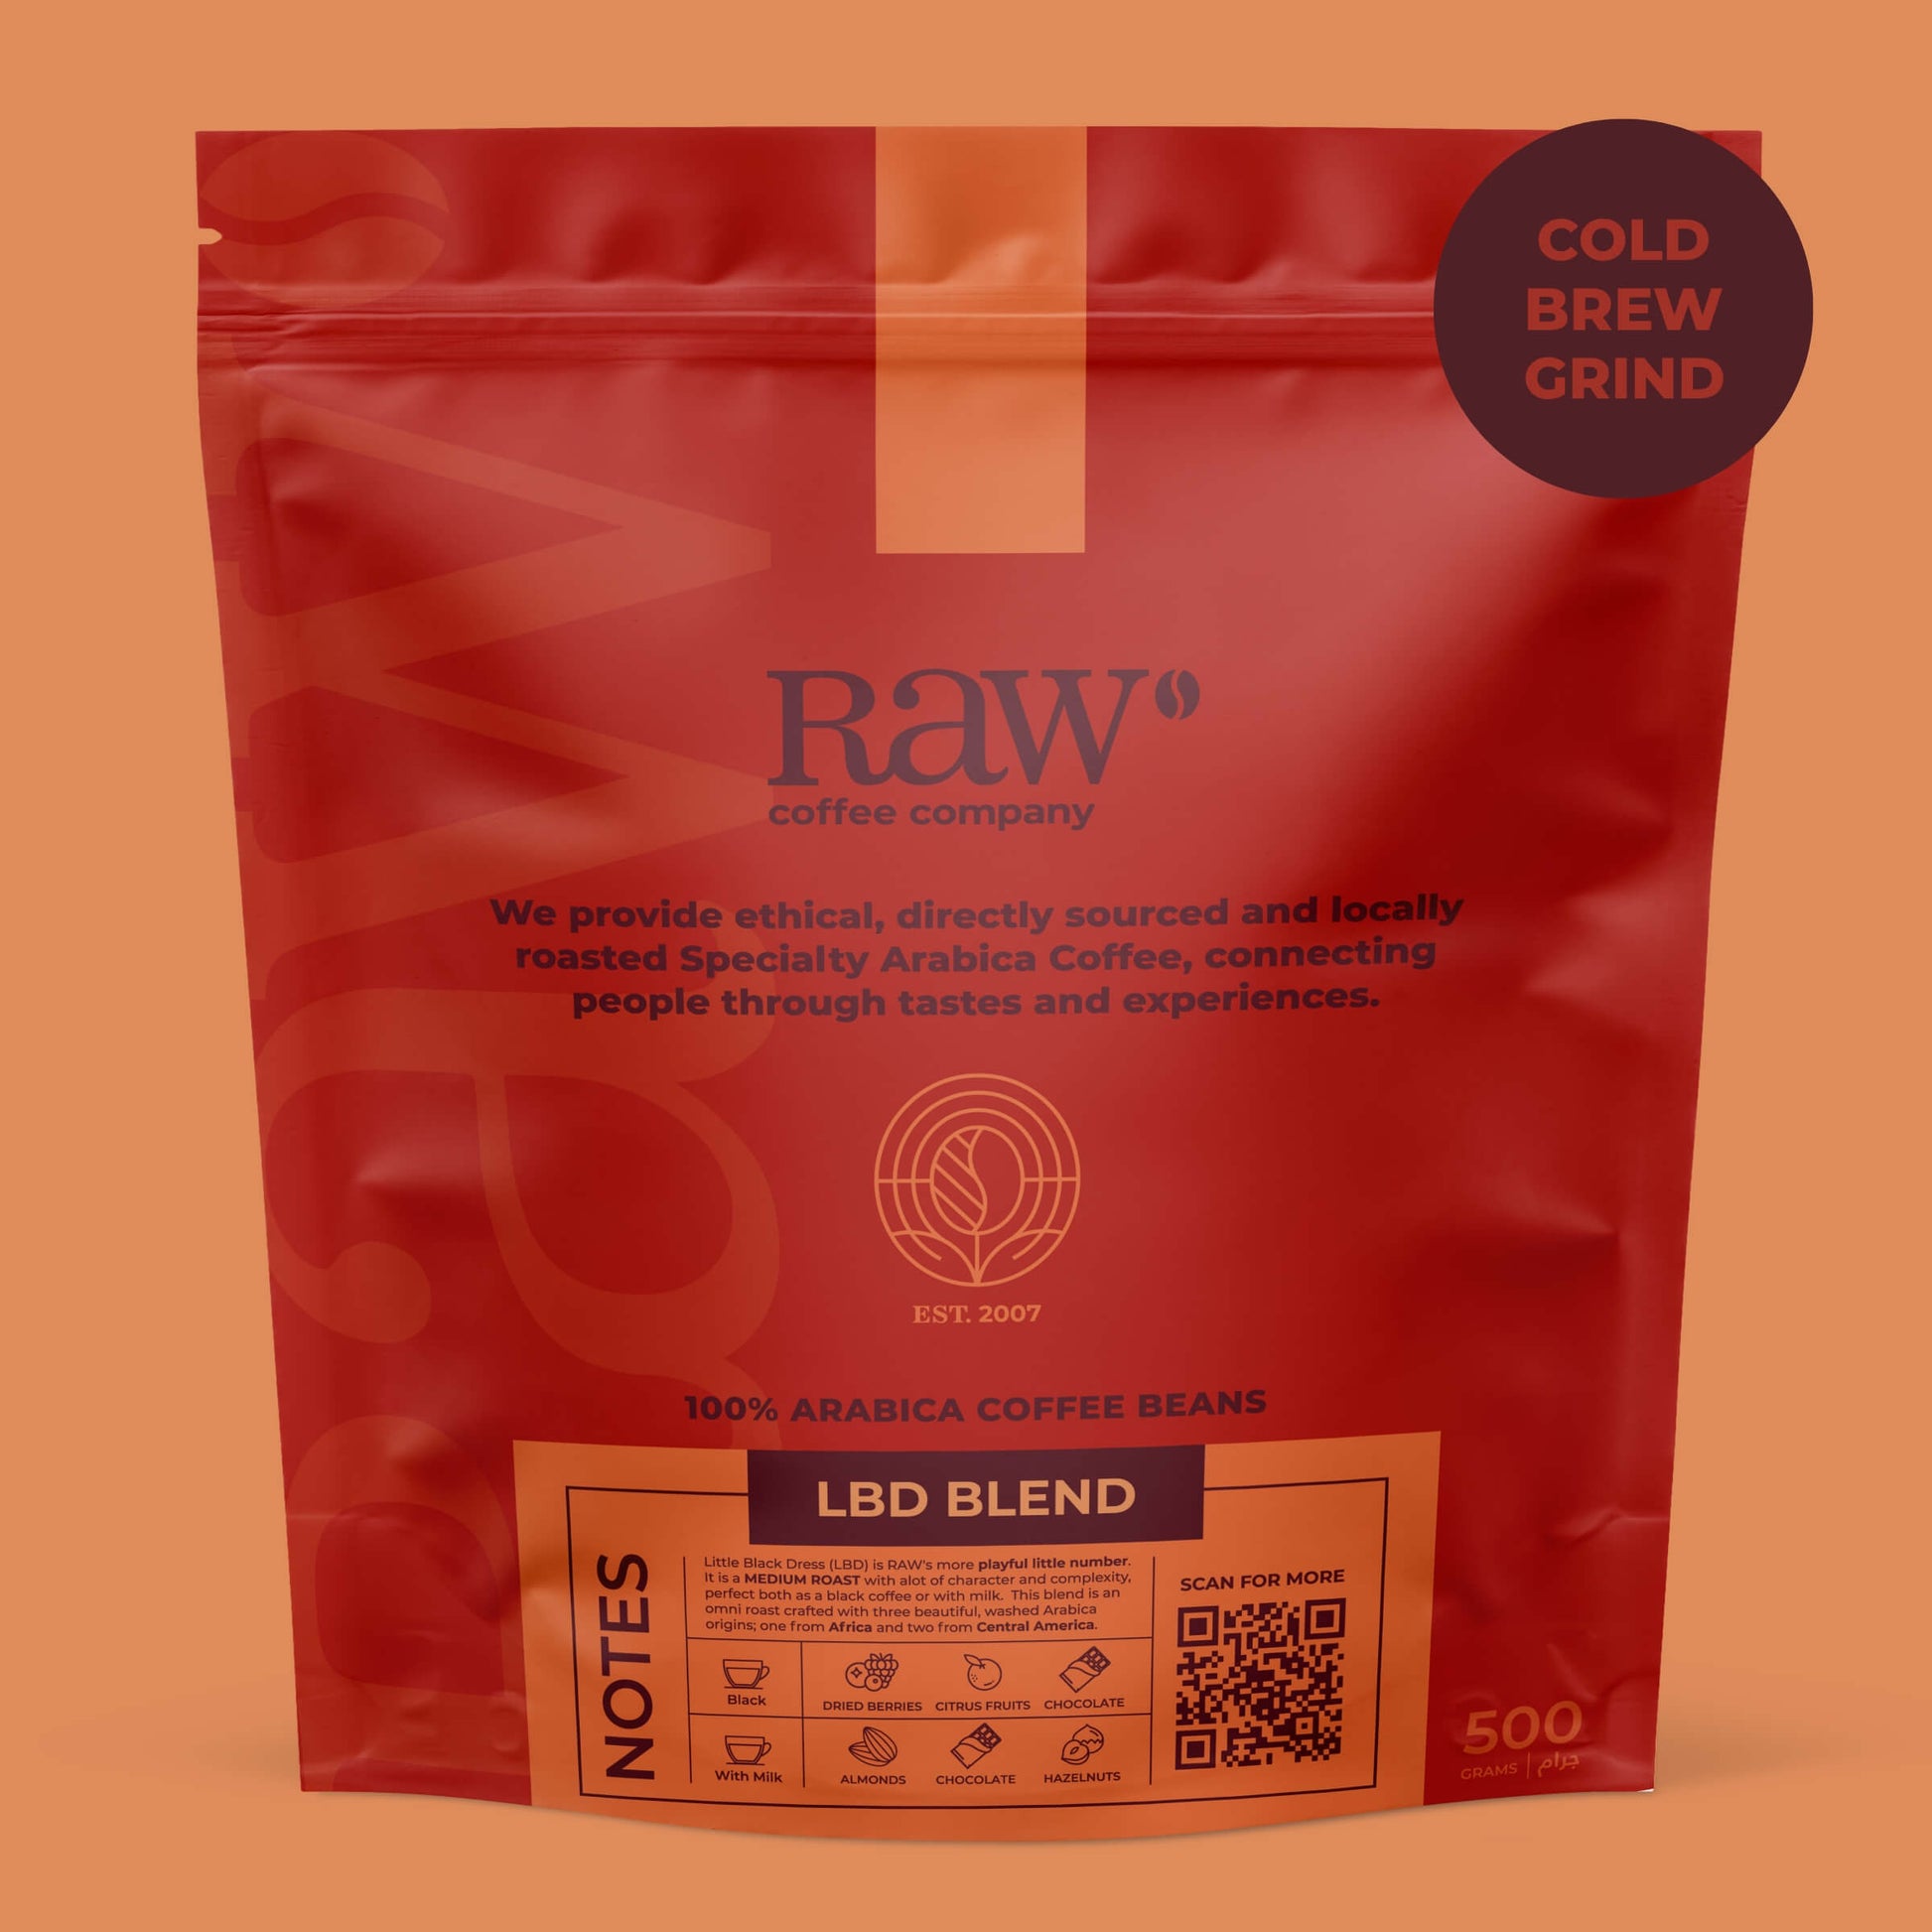 LBD-Blend-Coffee-500gm-Cold-Brew_RAW-Coffee-Company